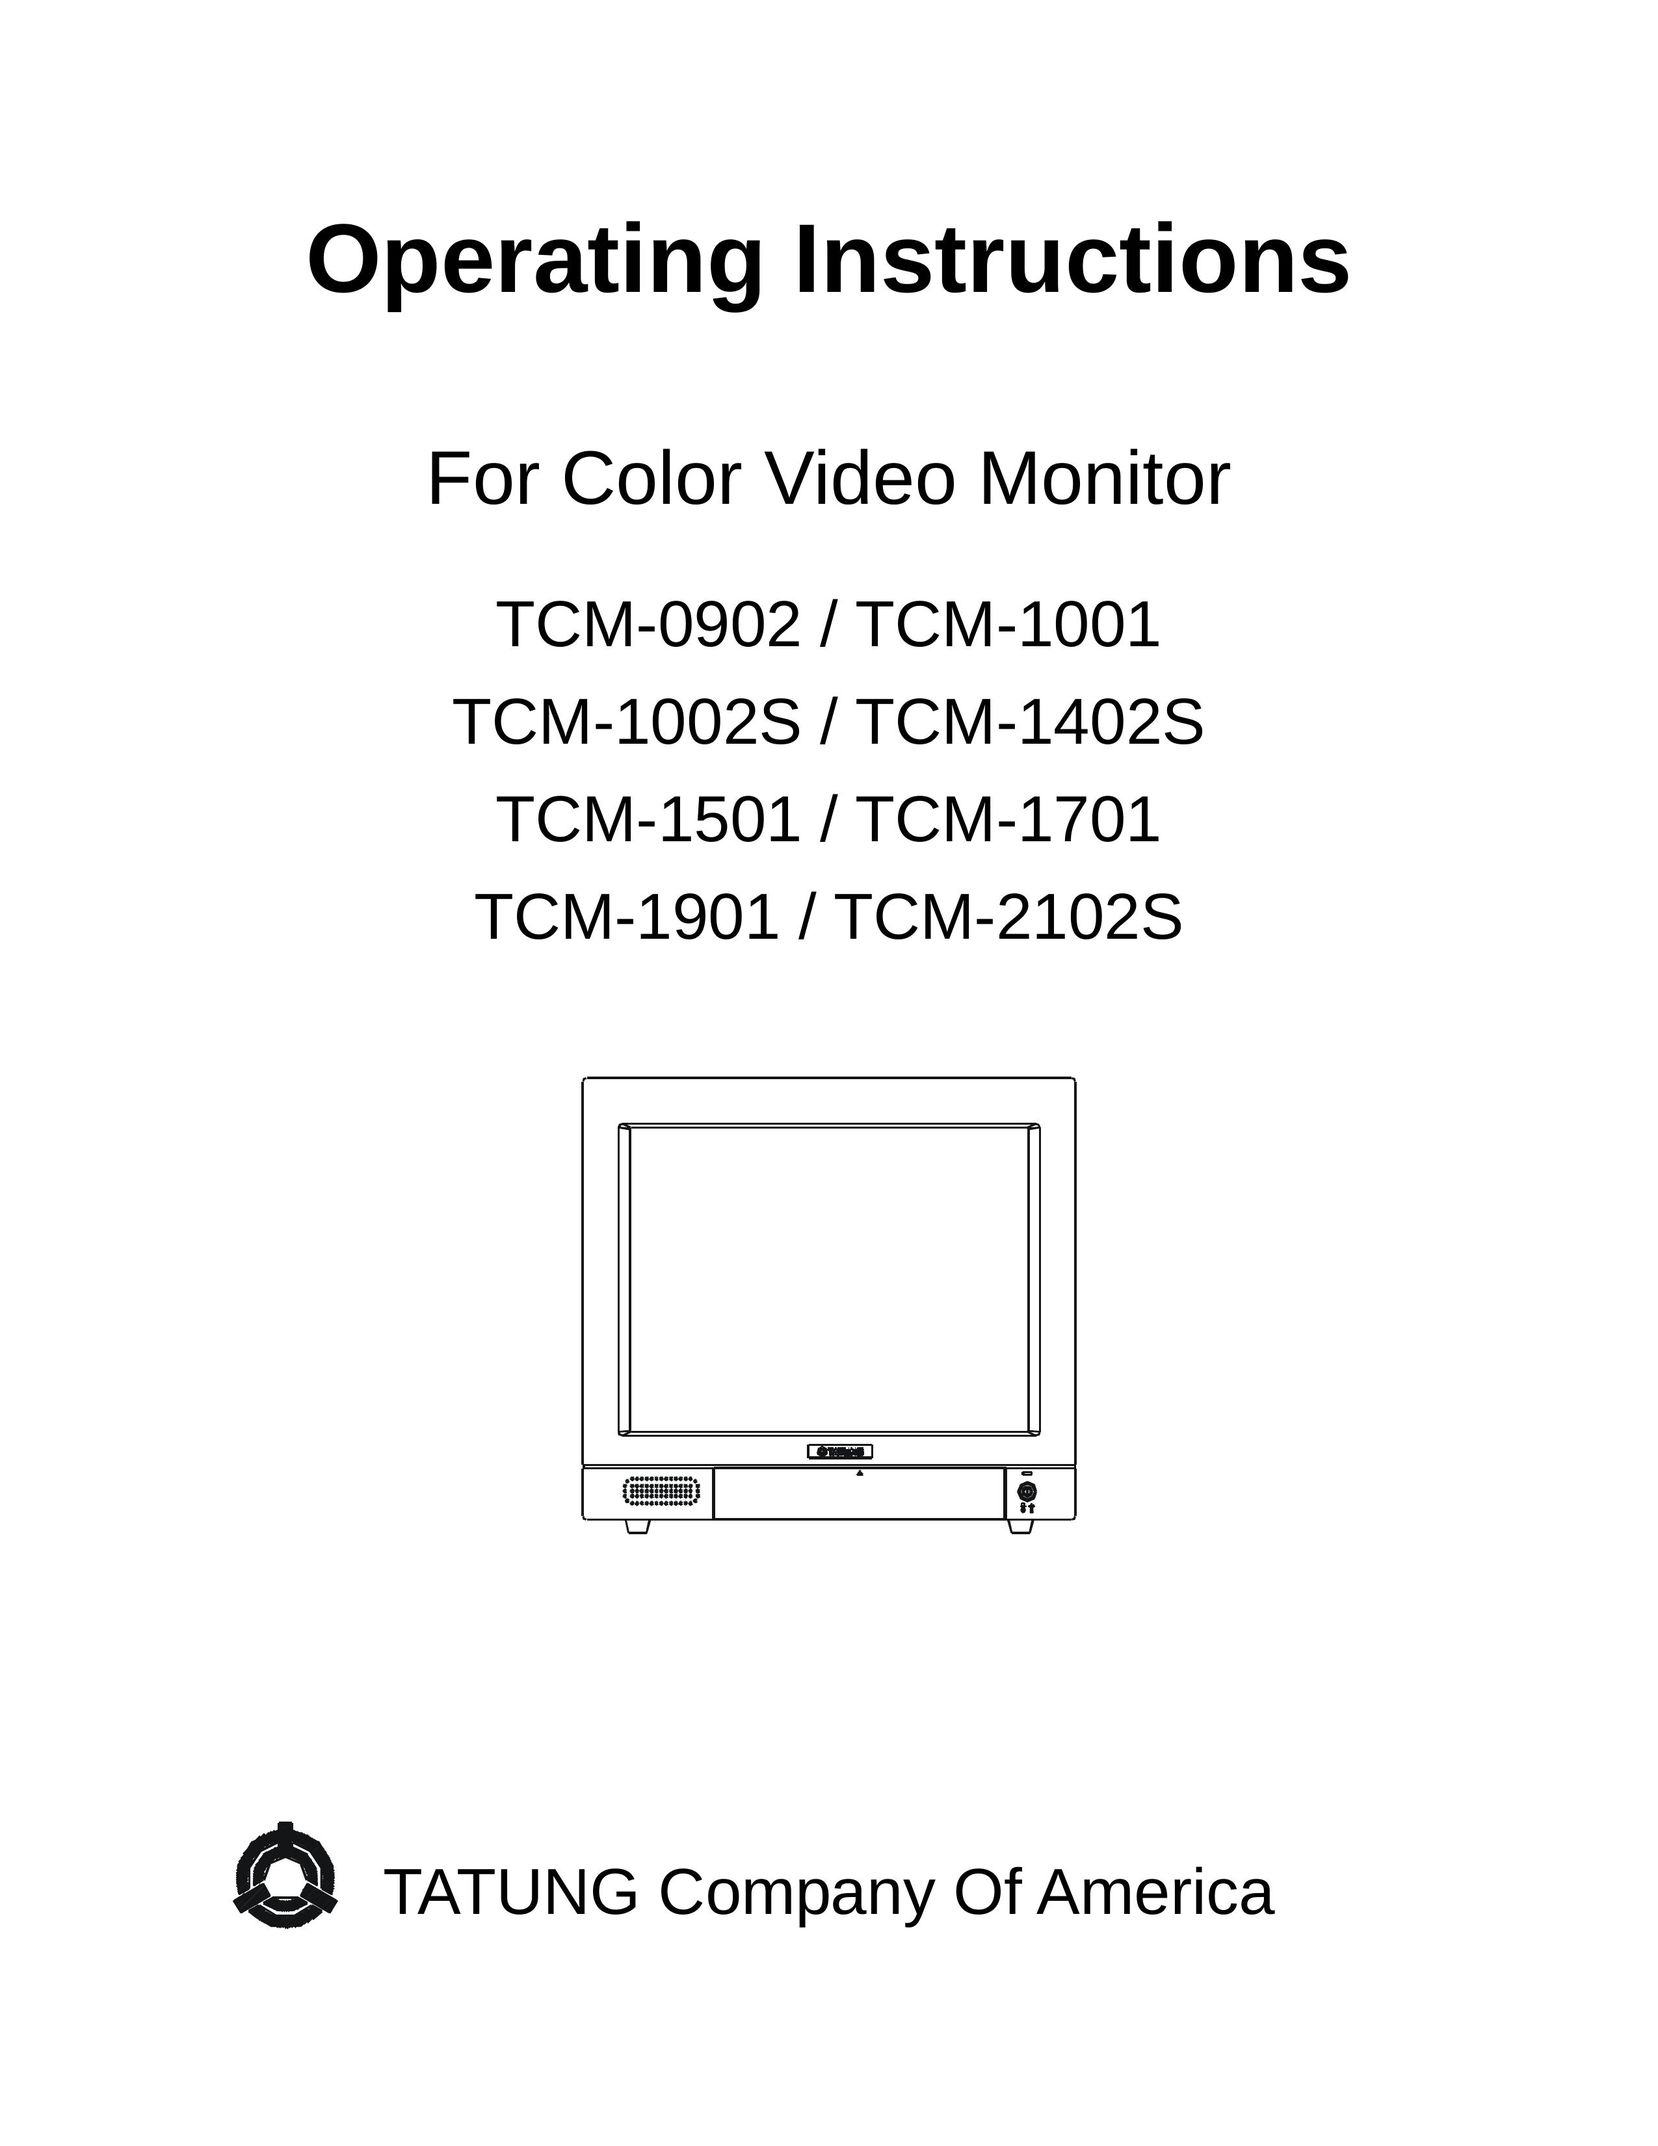 Tatung TCM-1701 Home Theater Screen User Manual